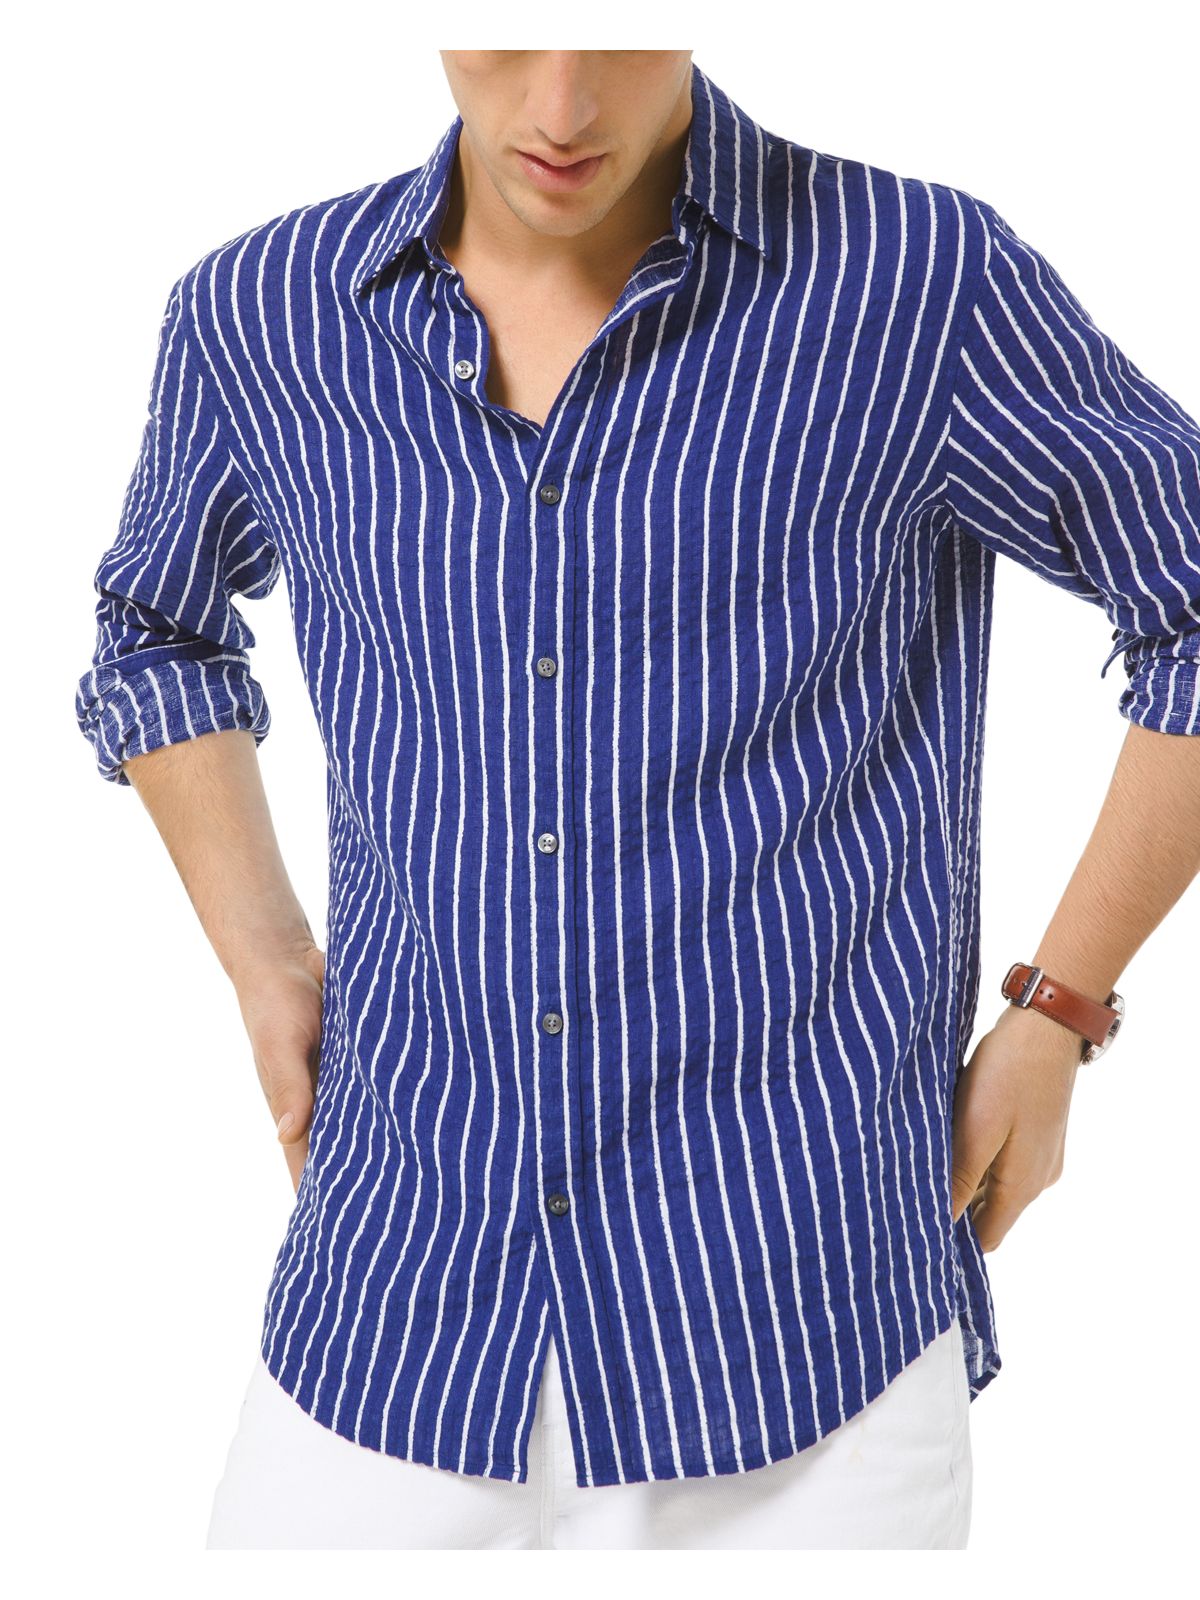 MICHAEL KORS Mens Blue Striped Collared Slim Fit Button Down Shirt XXL